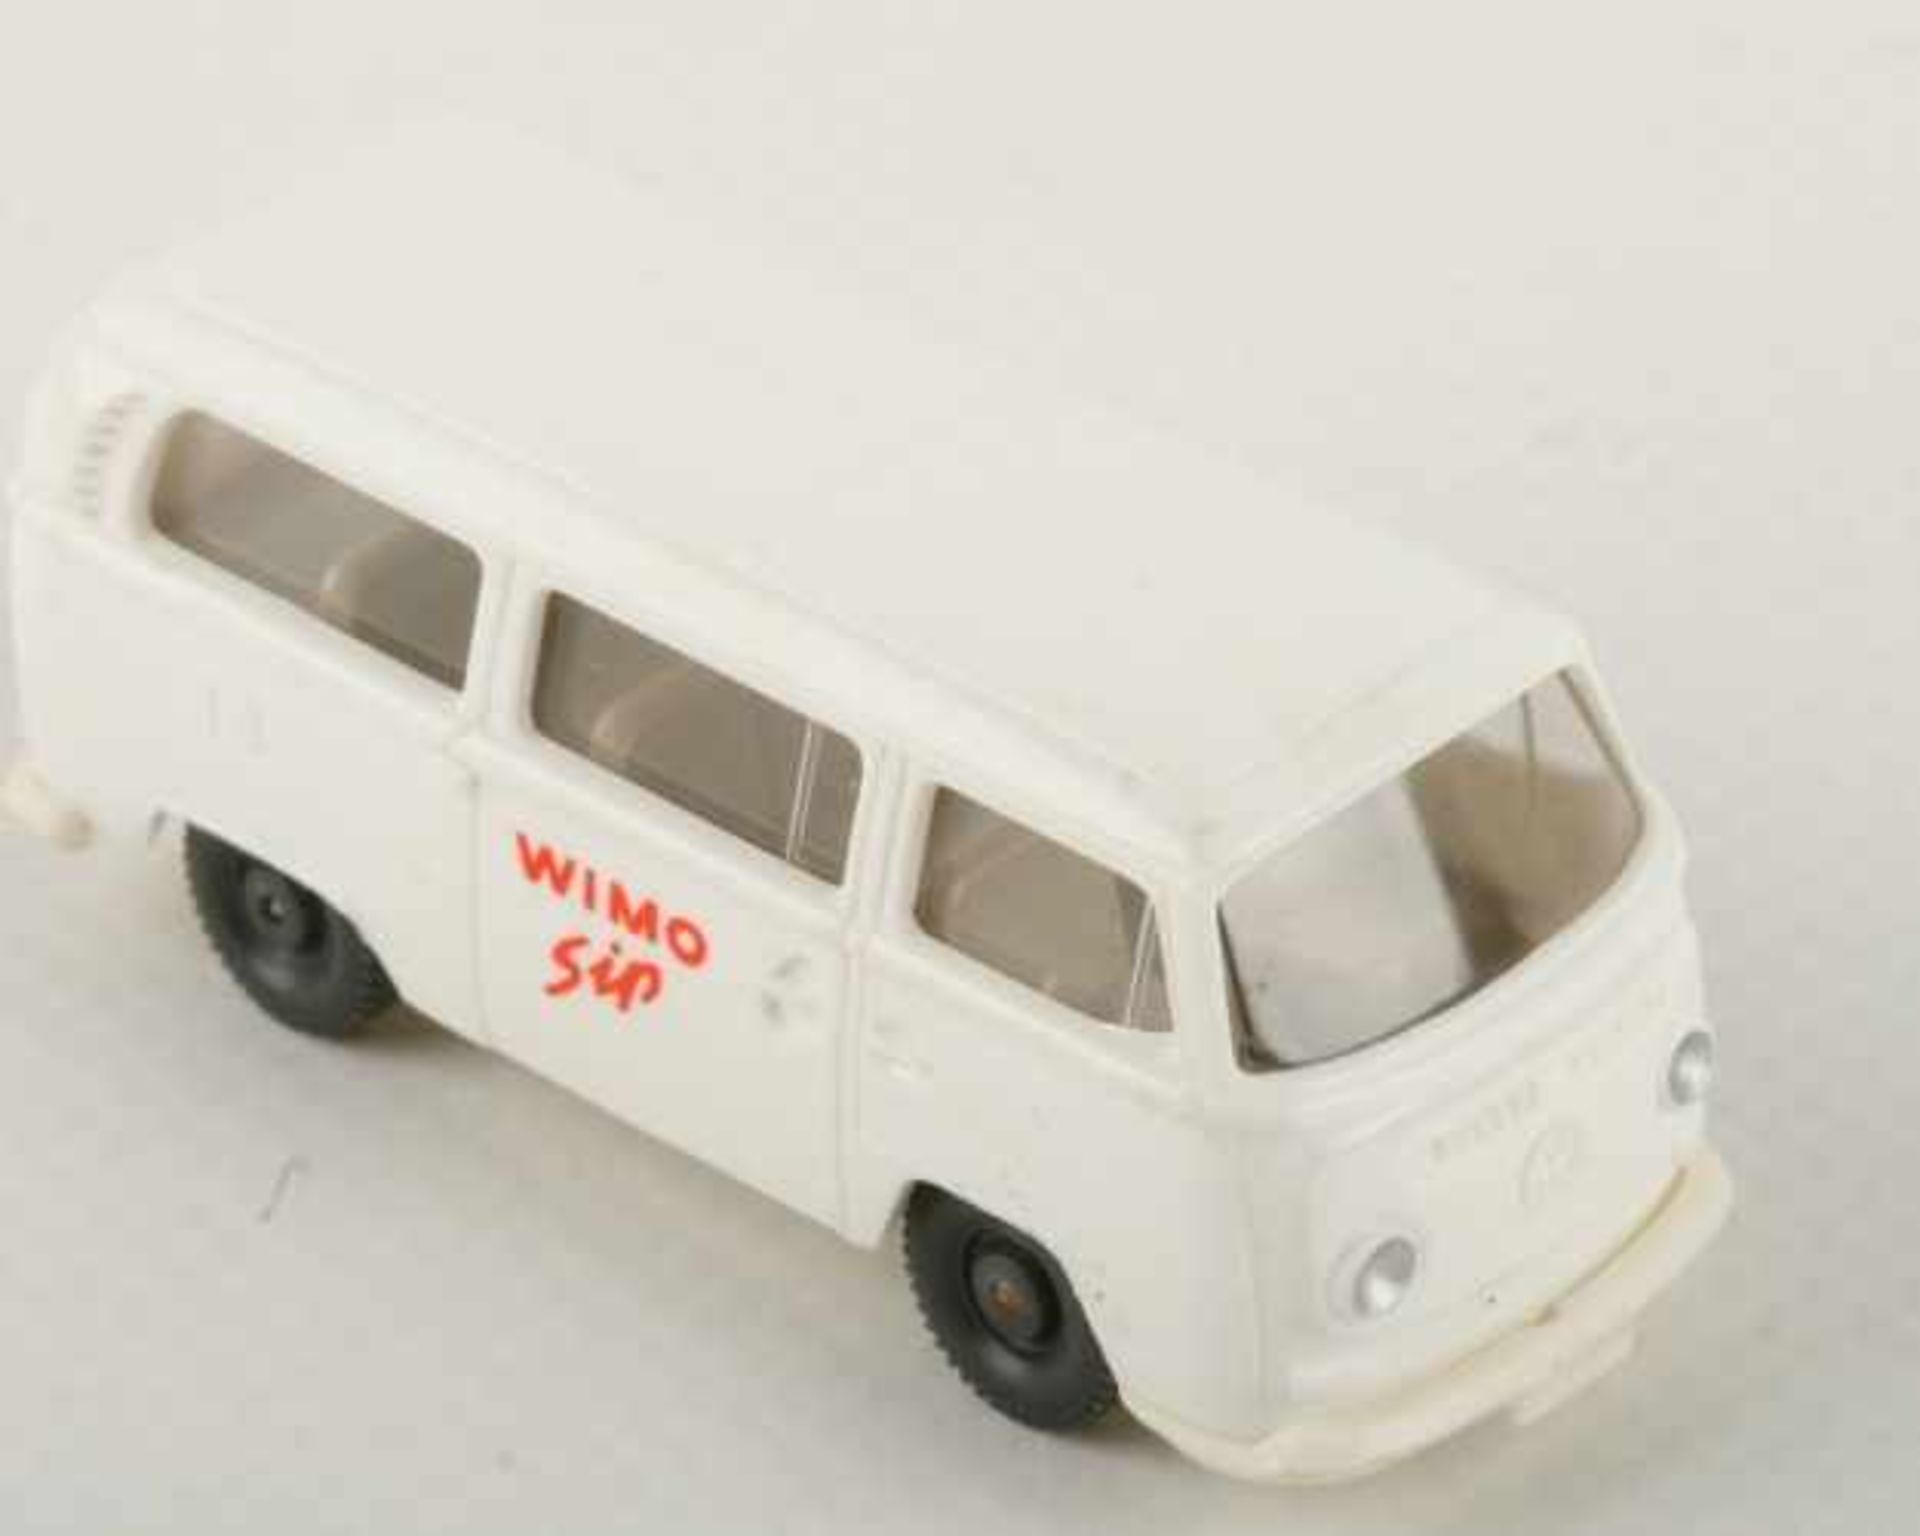 Wiking VW T2 Kombi "WIMO Sip" 315/3, neuwertig